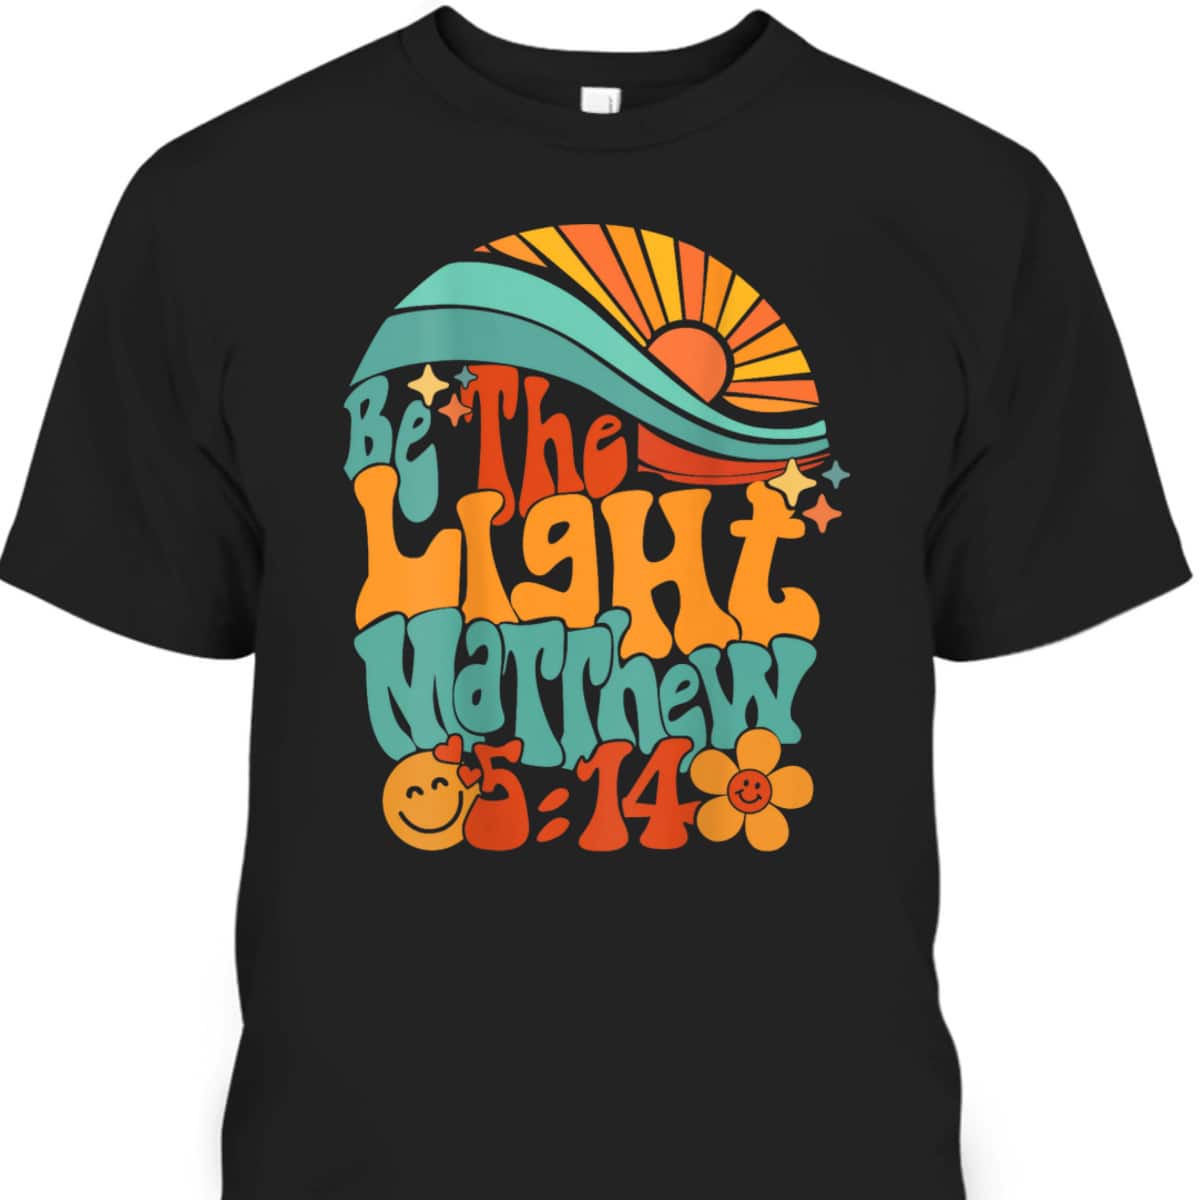 Vintage Groovy Sunset Be The Light Matthew 514 T-Shirt